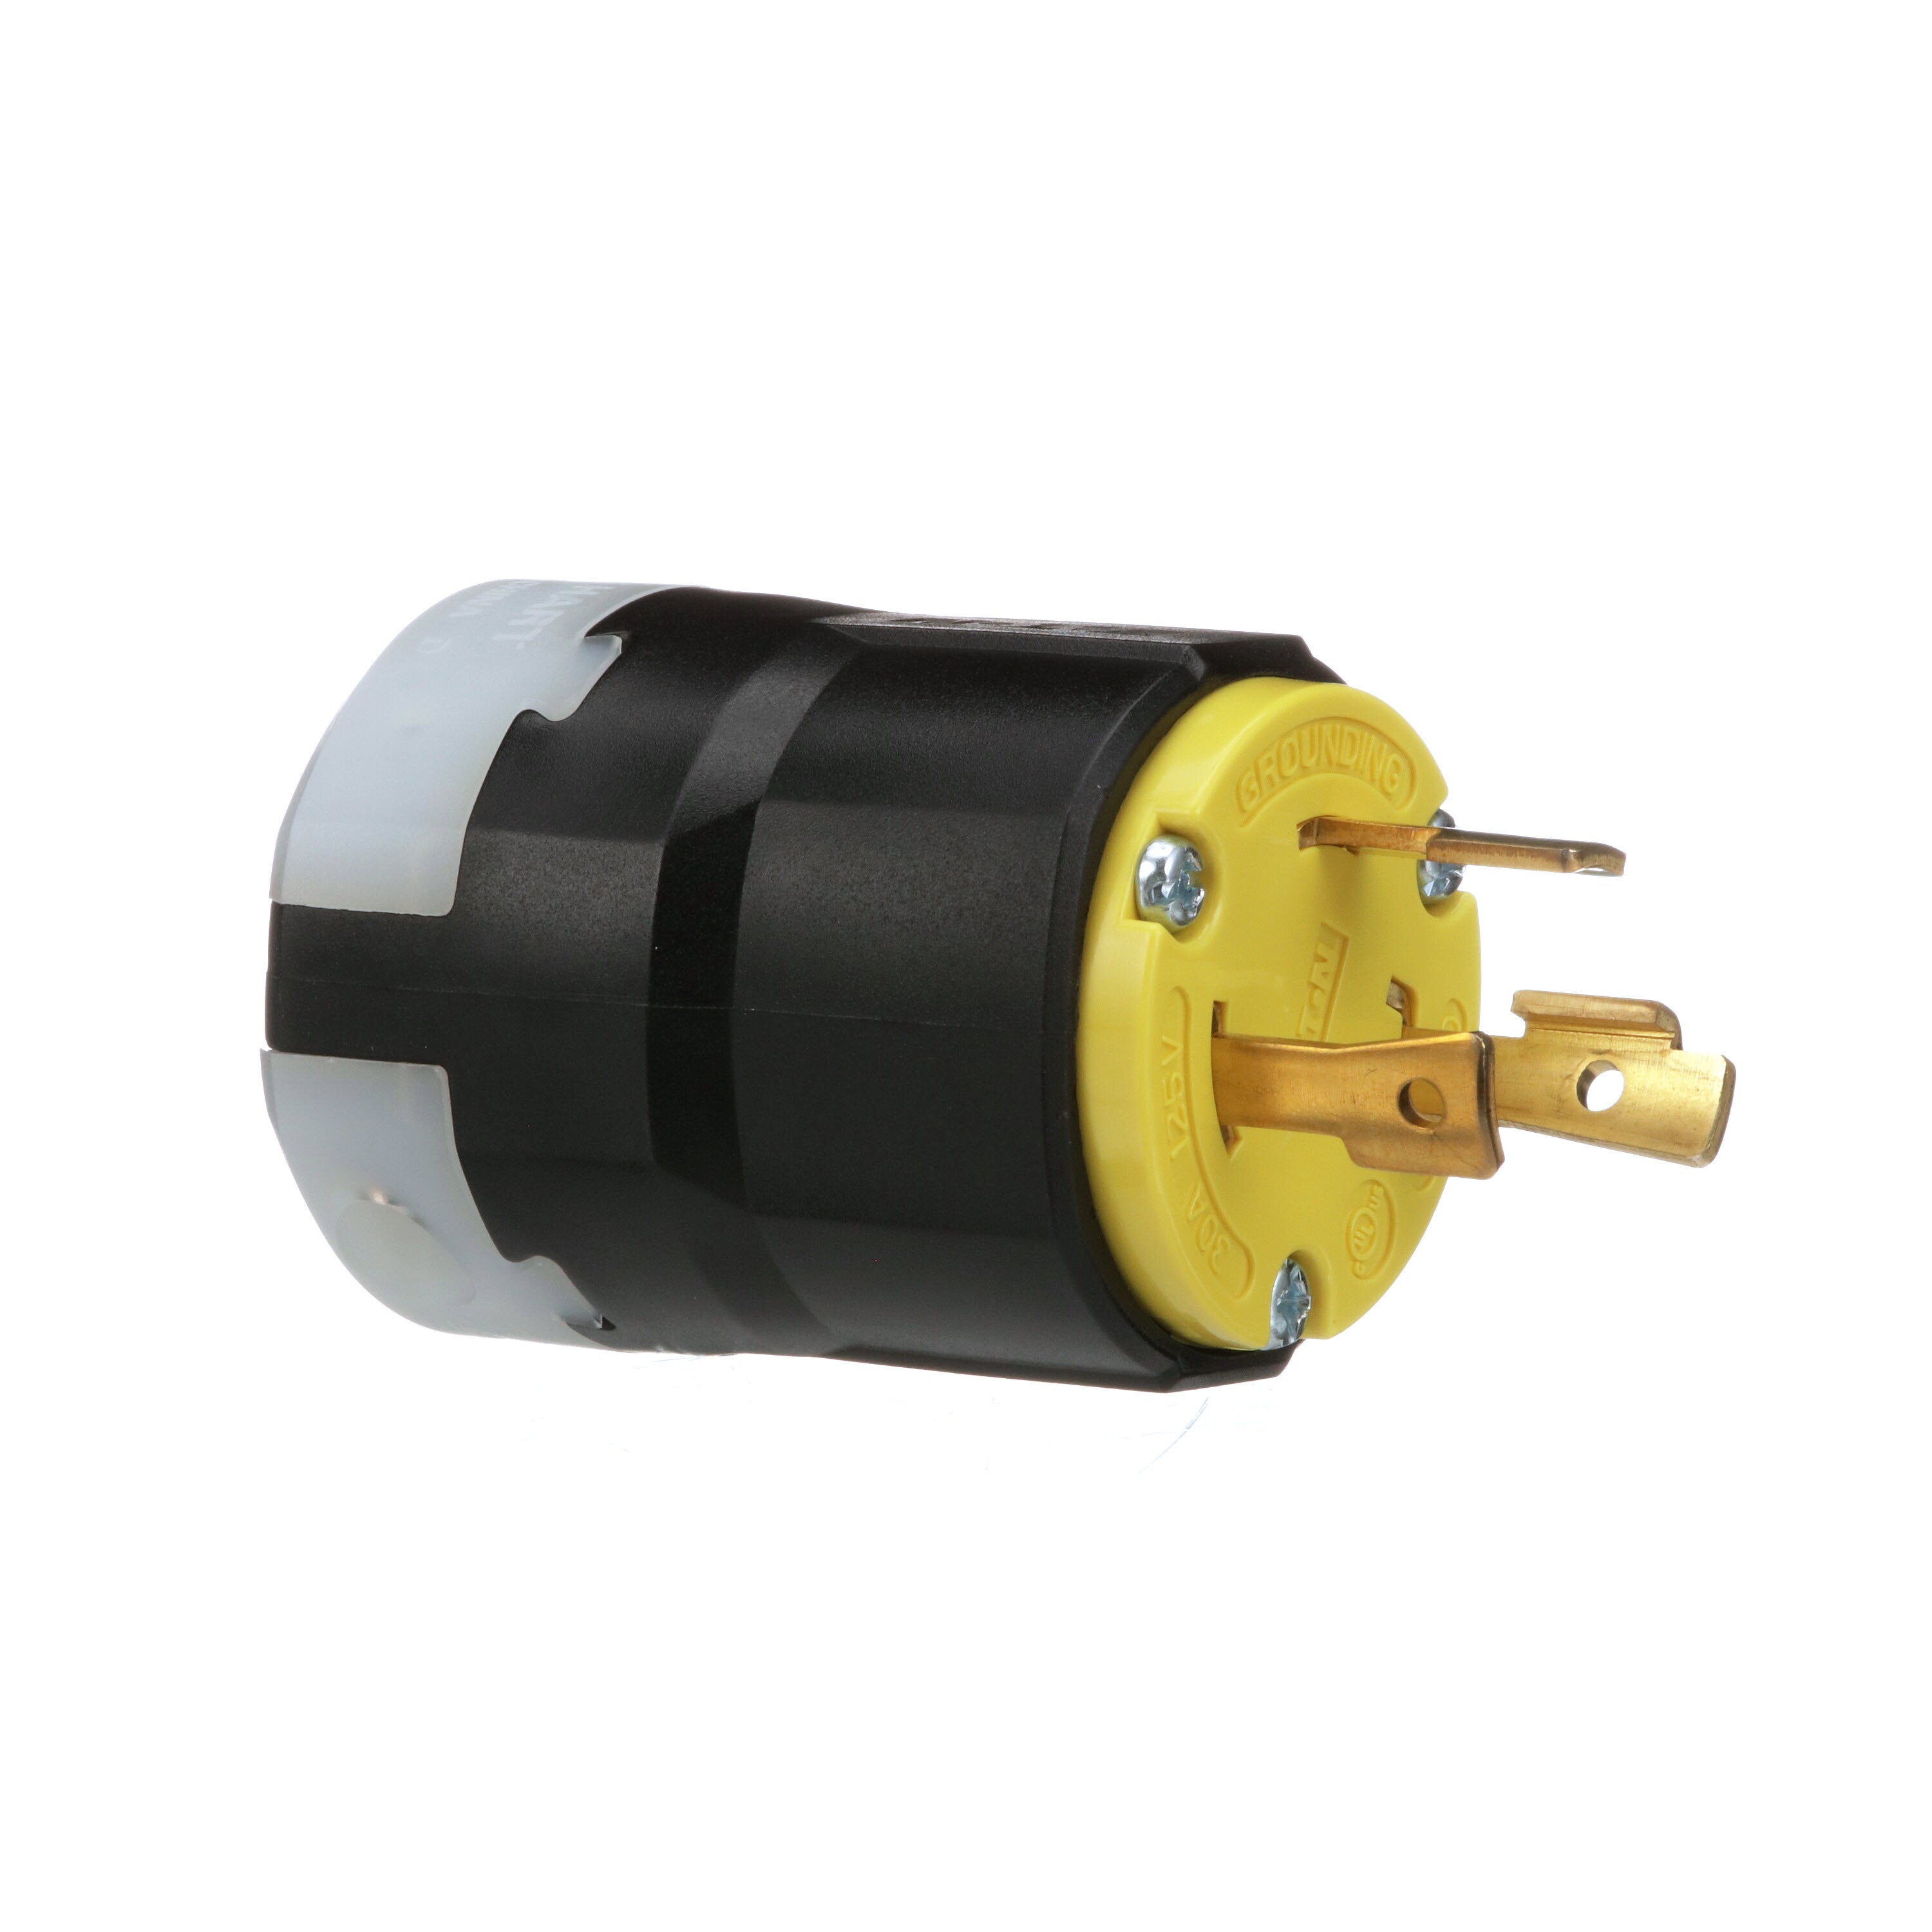 L5-30p Arrow Hart Plugs 30A 125v 3-Prong Turn And Pull Twist-lock Connectors 